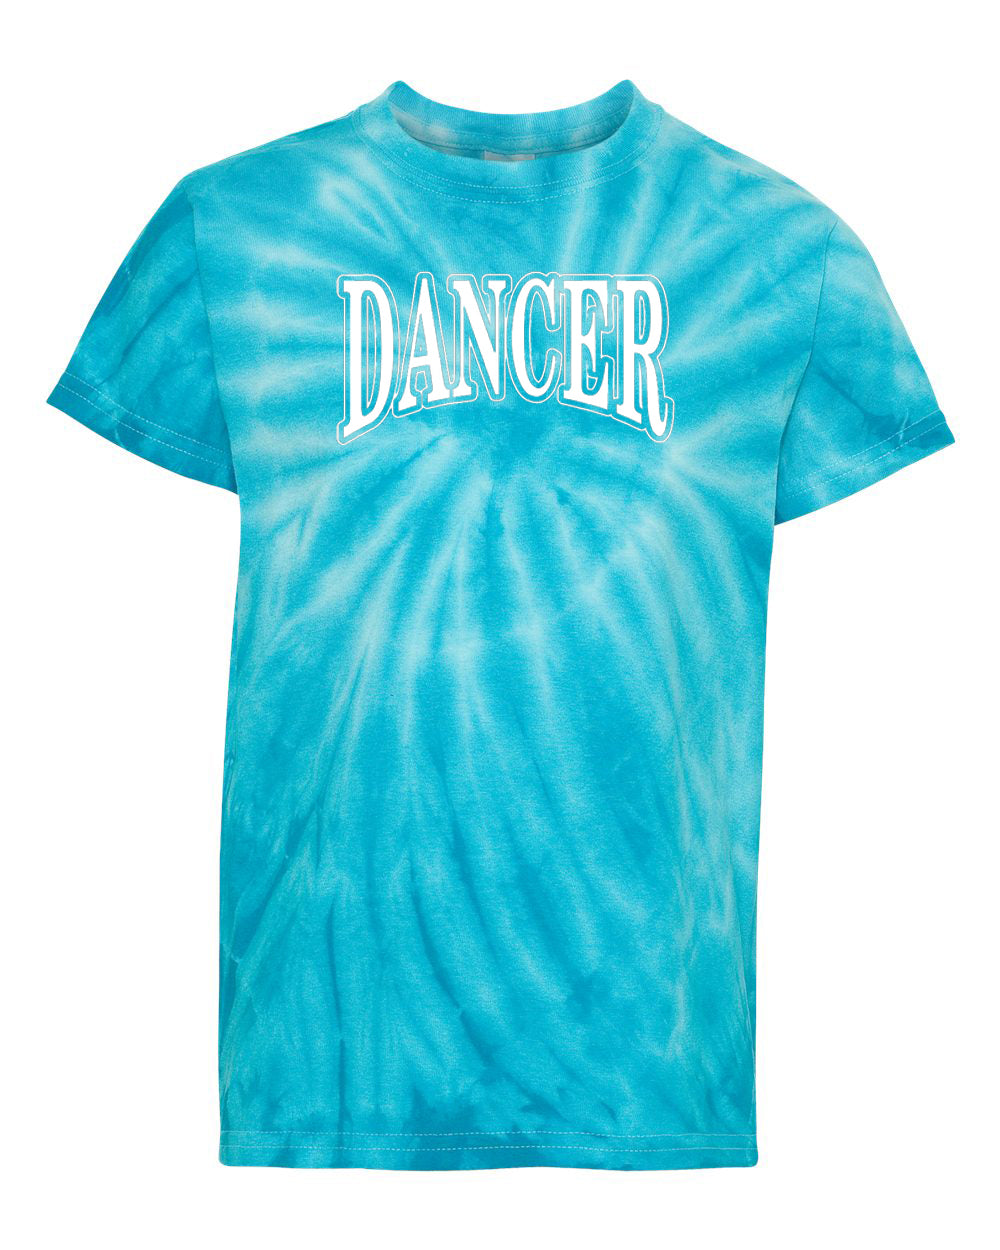 Dancer Youth Tie Dye T-Shirt